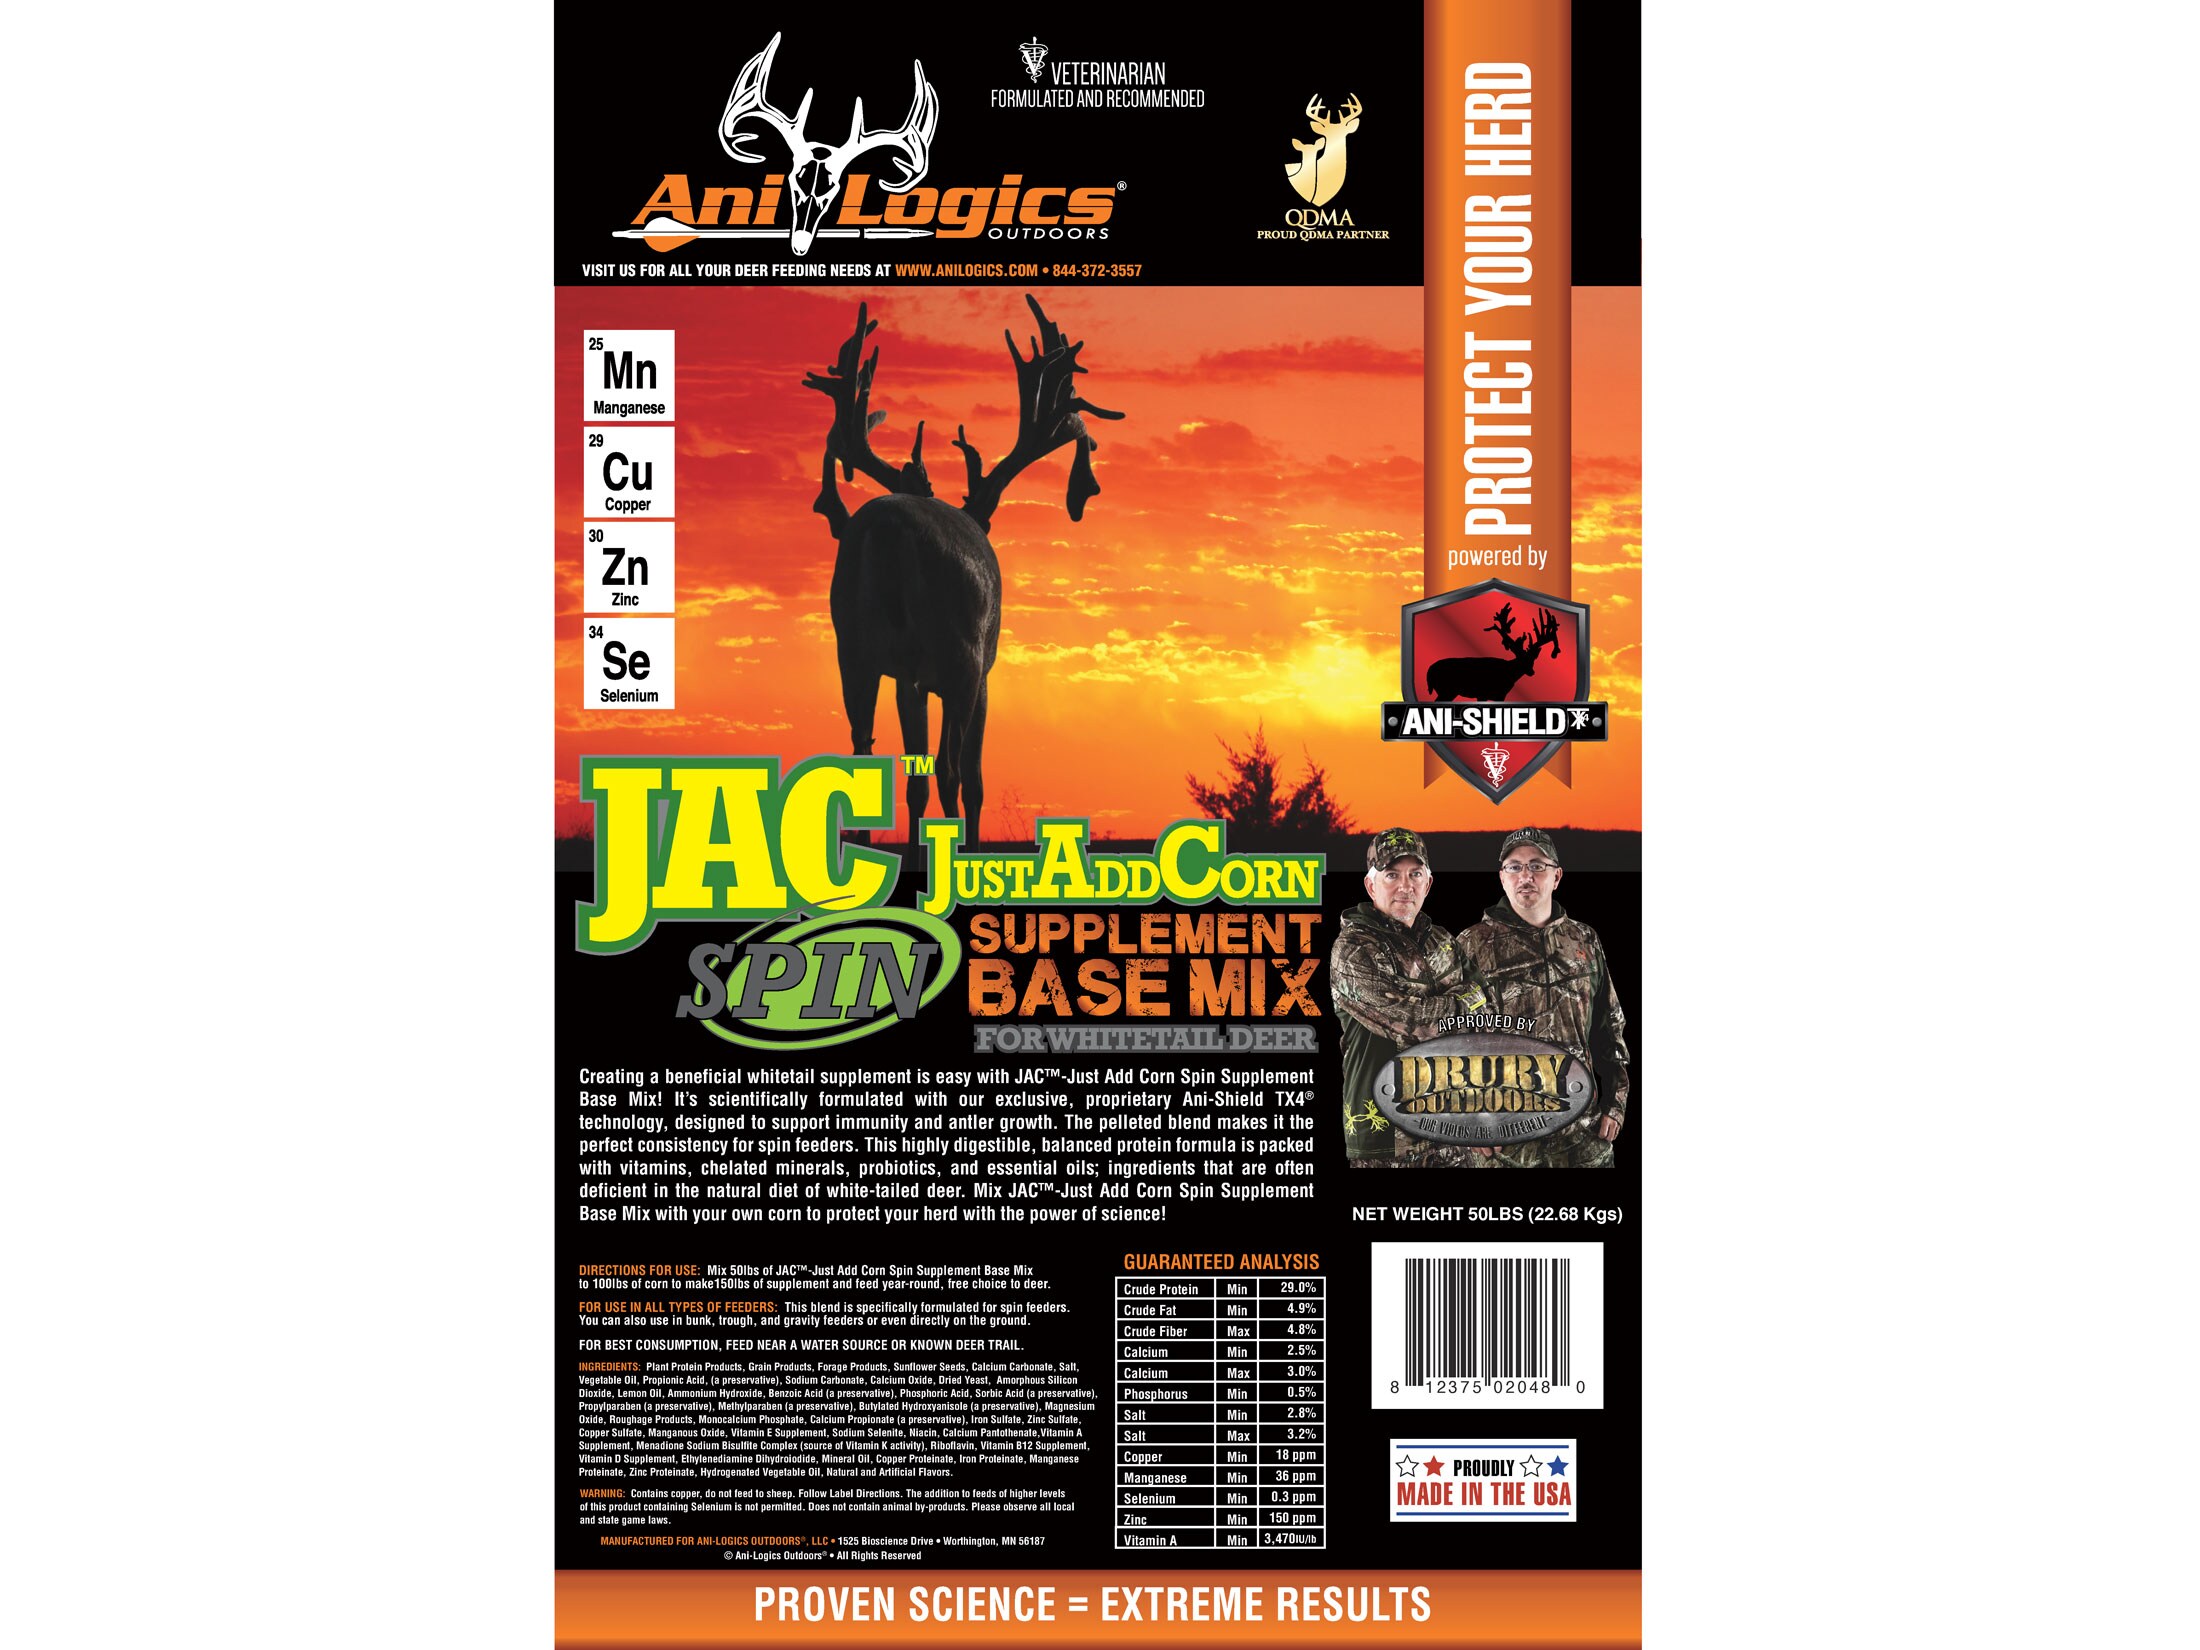 Anilogics JustAddCorn SPIN Base Mix Deer Supplement in 50lb Bags For Sale